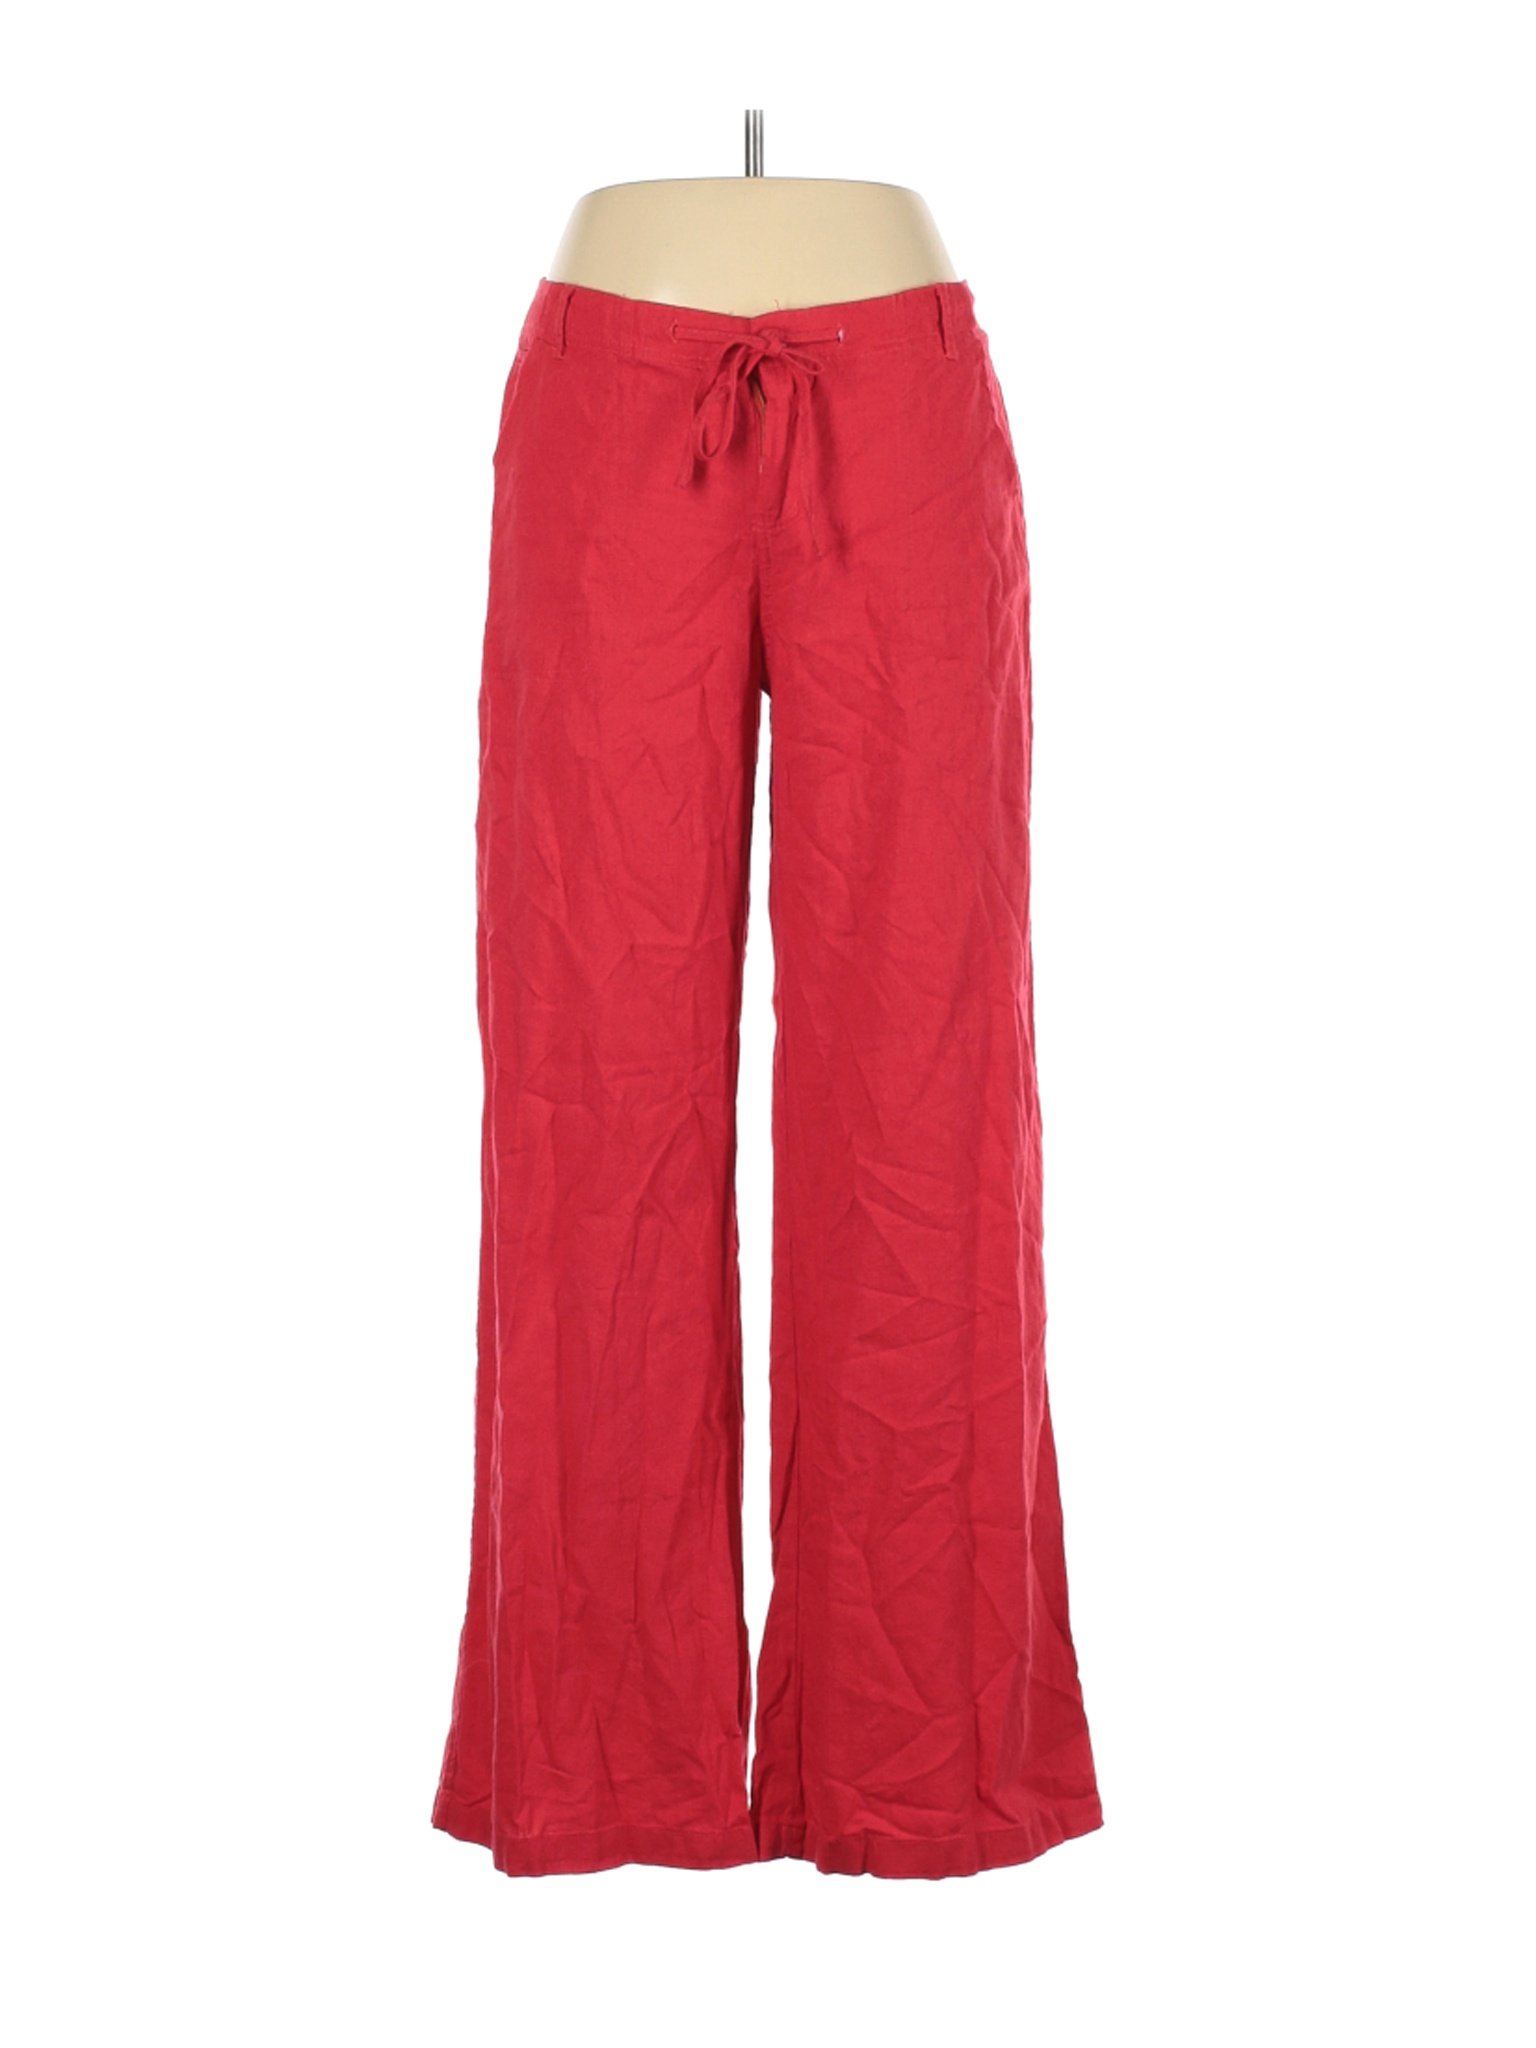 Just Living Women Red Linen Pants L | eBay